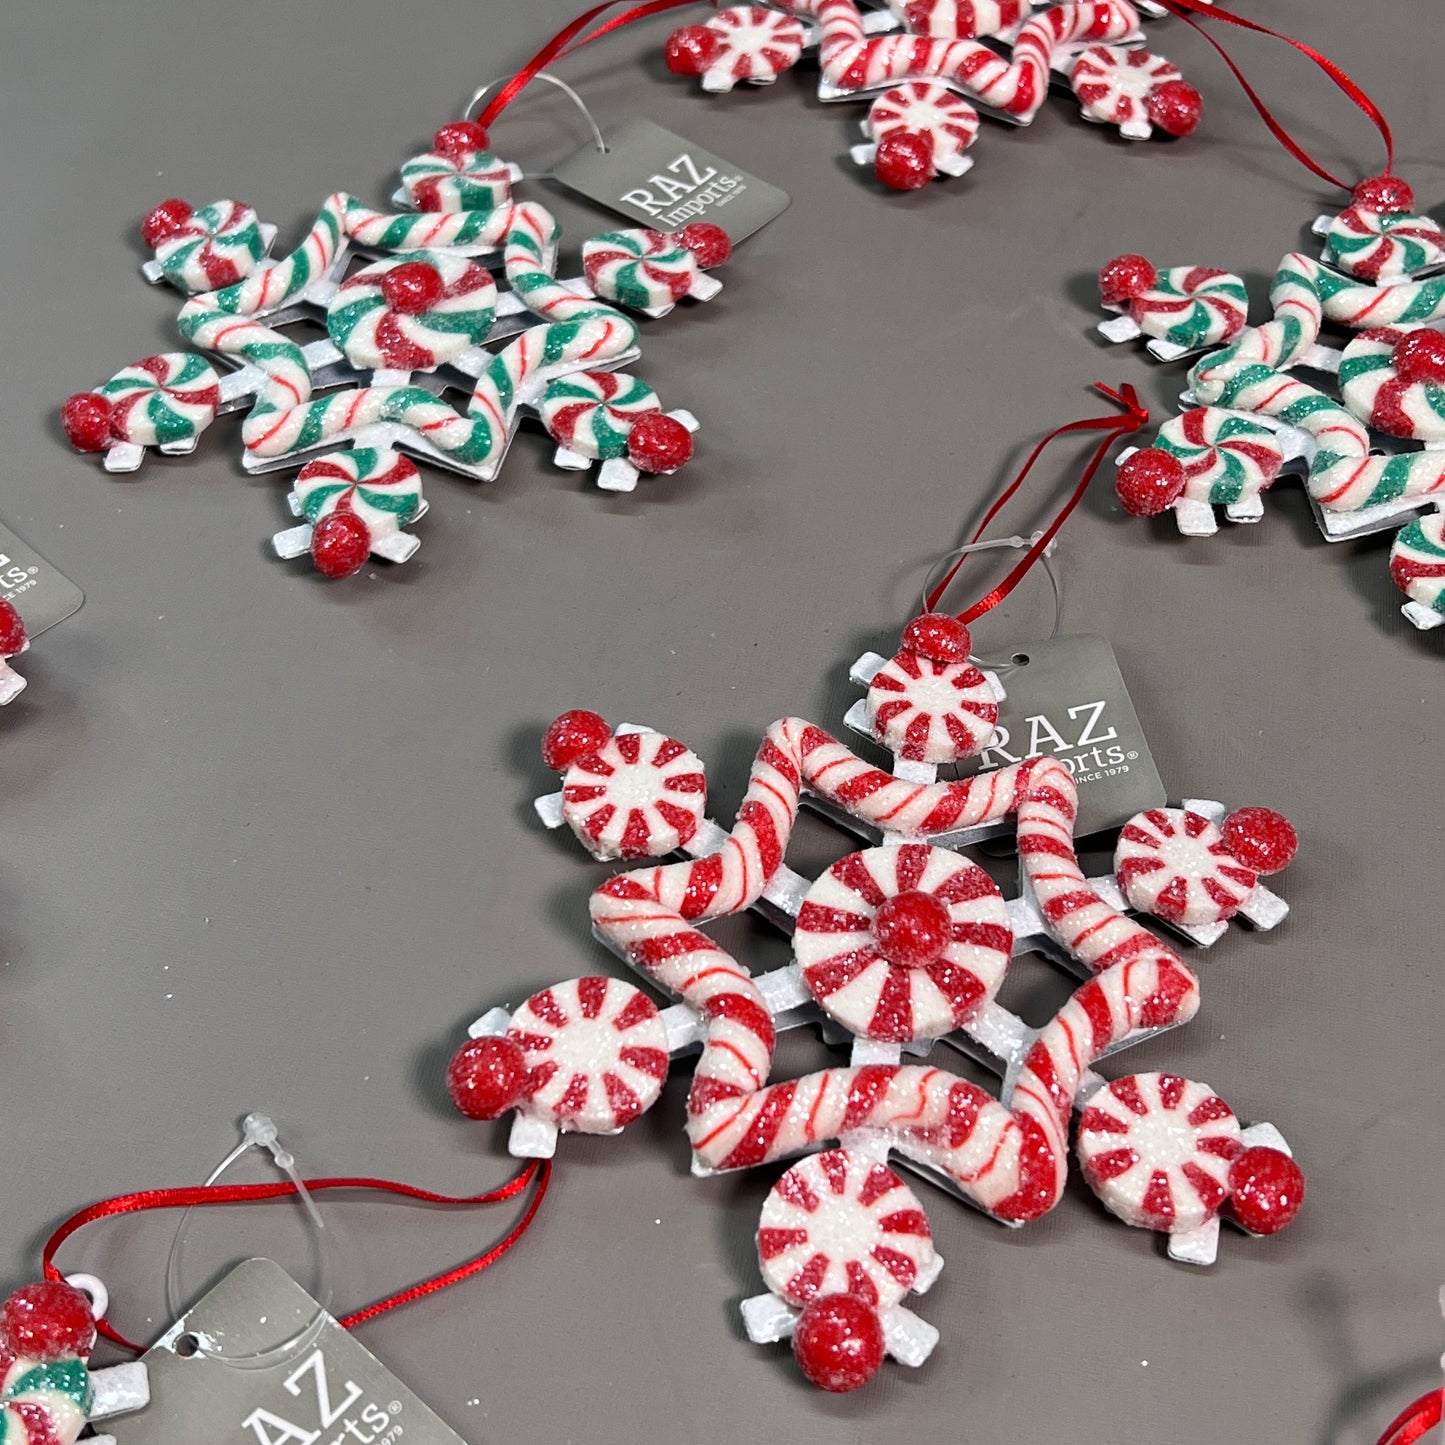 RAZ IMPORTS 12-PK Christmas Holiday 5.5" Peppermint Snowflake Ornament 4215554 (New)